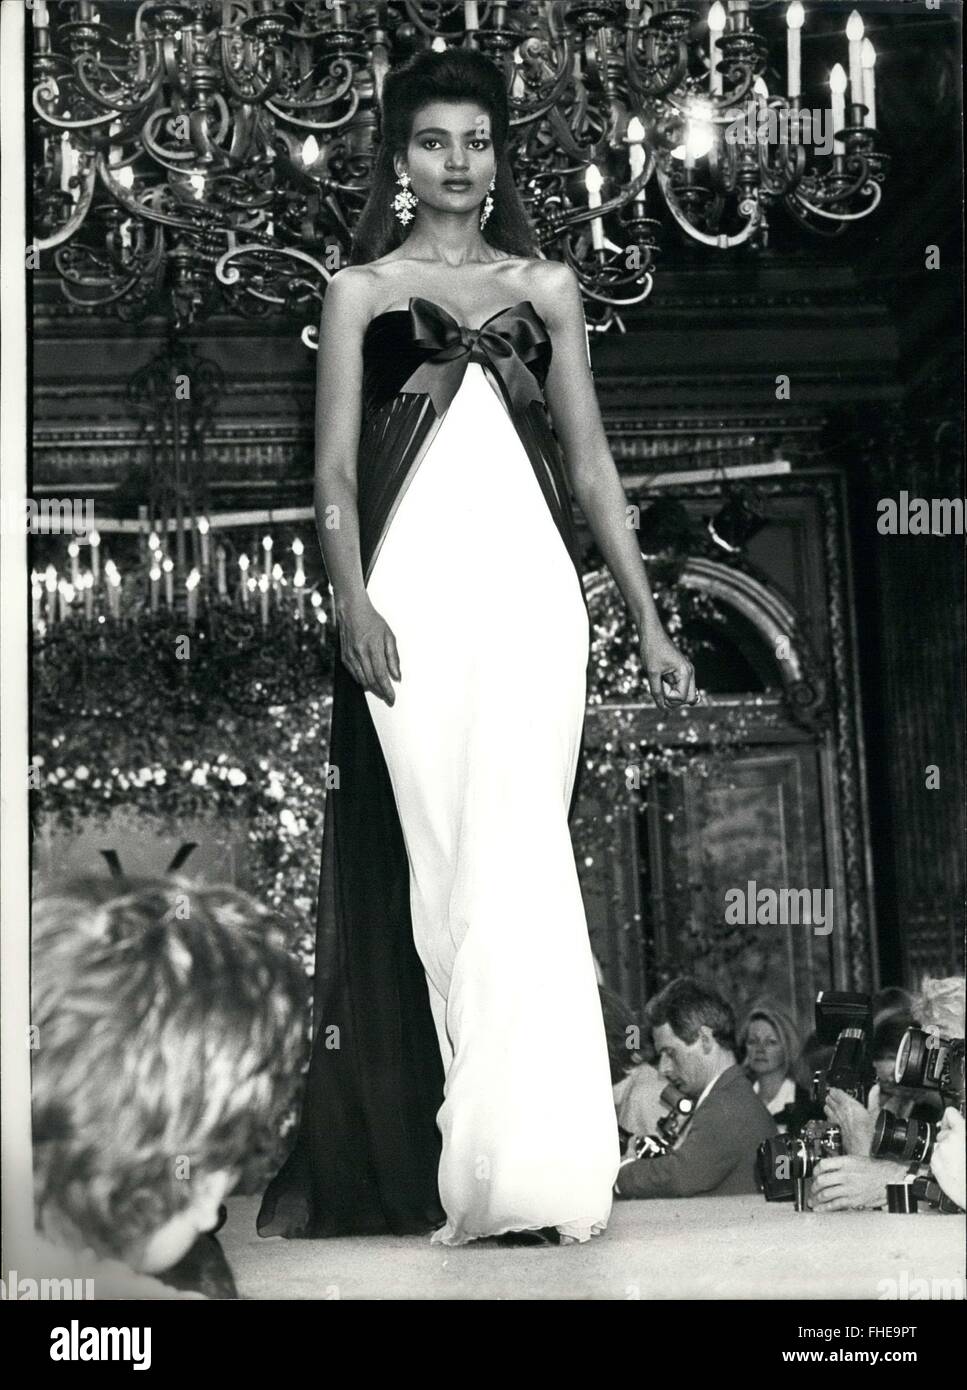 Abiti Da Cerimonia Yves Saint Laurent.1966 Yves Saint Laurent Modello Indossando Autunno Inverno Abito